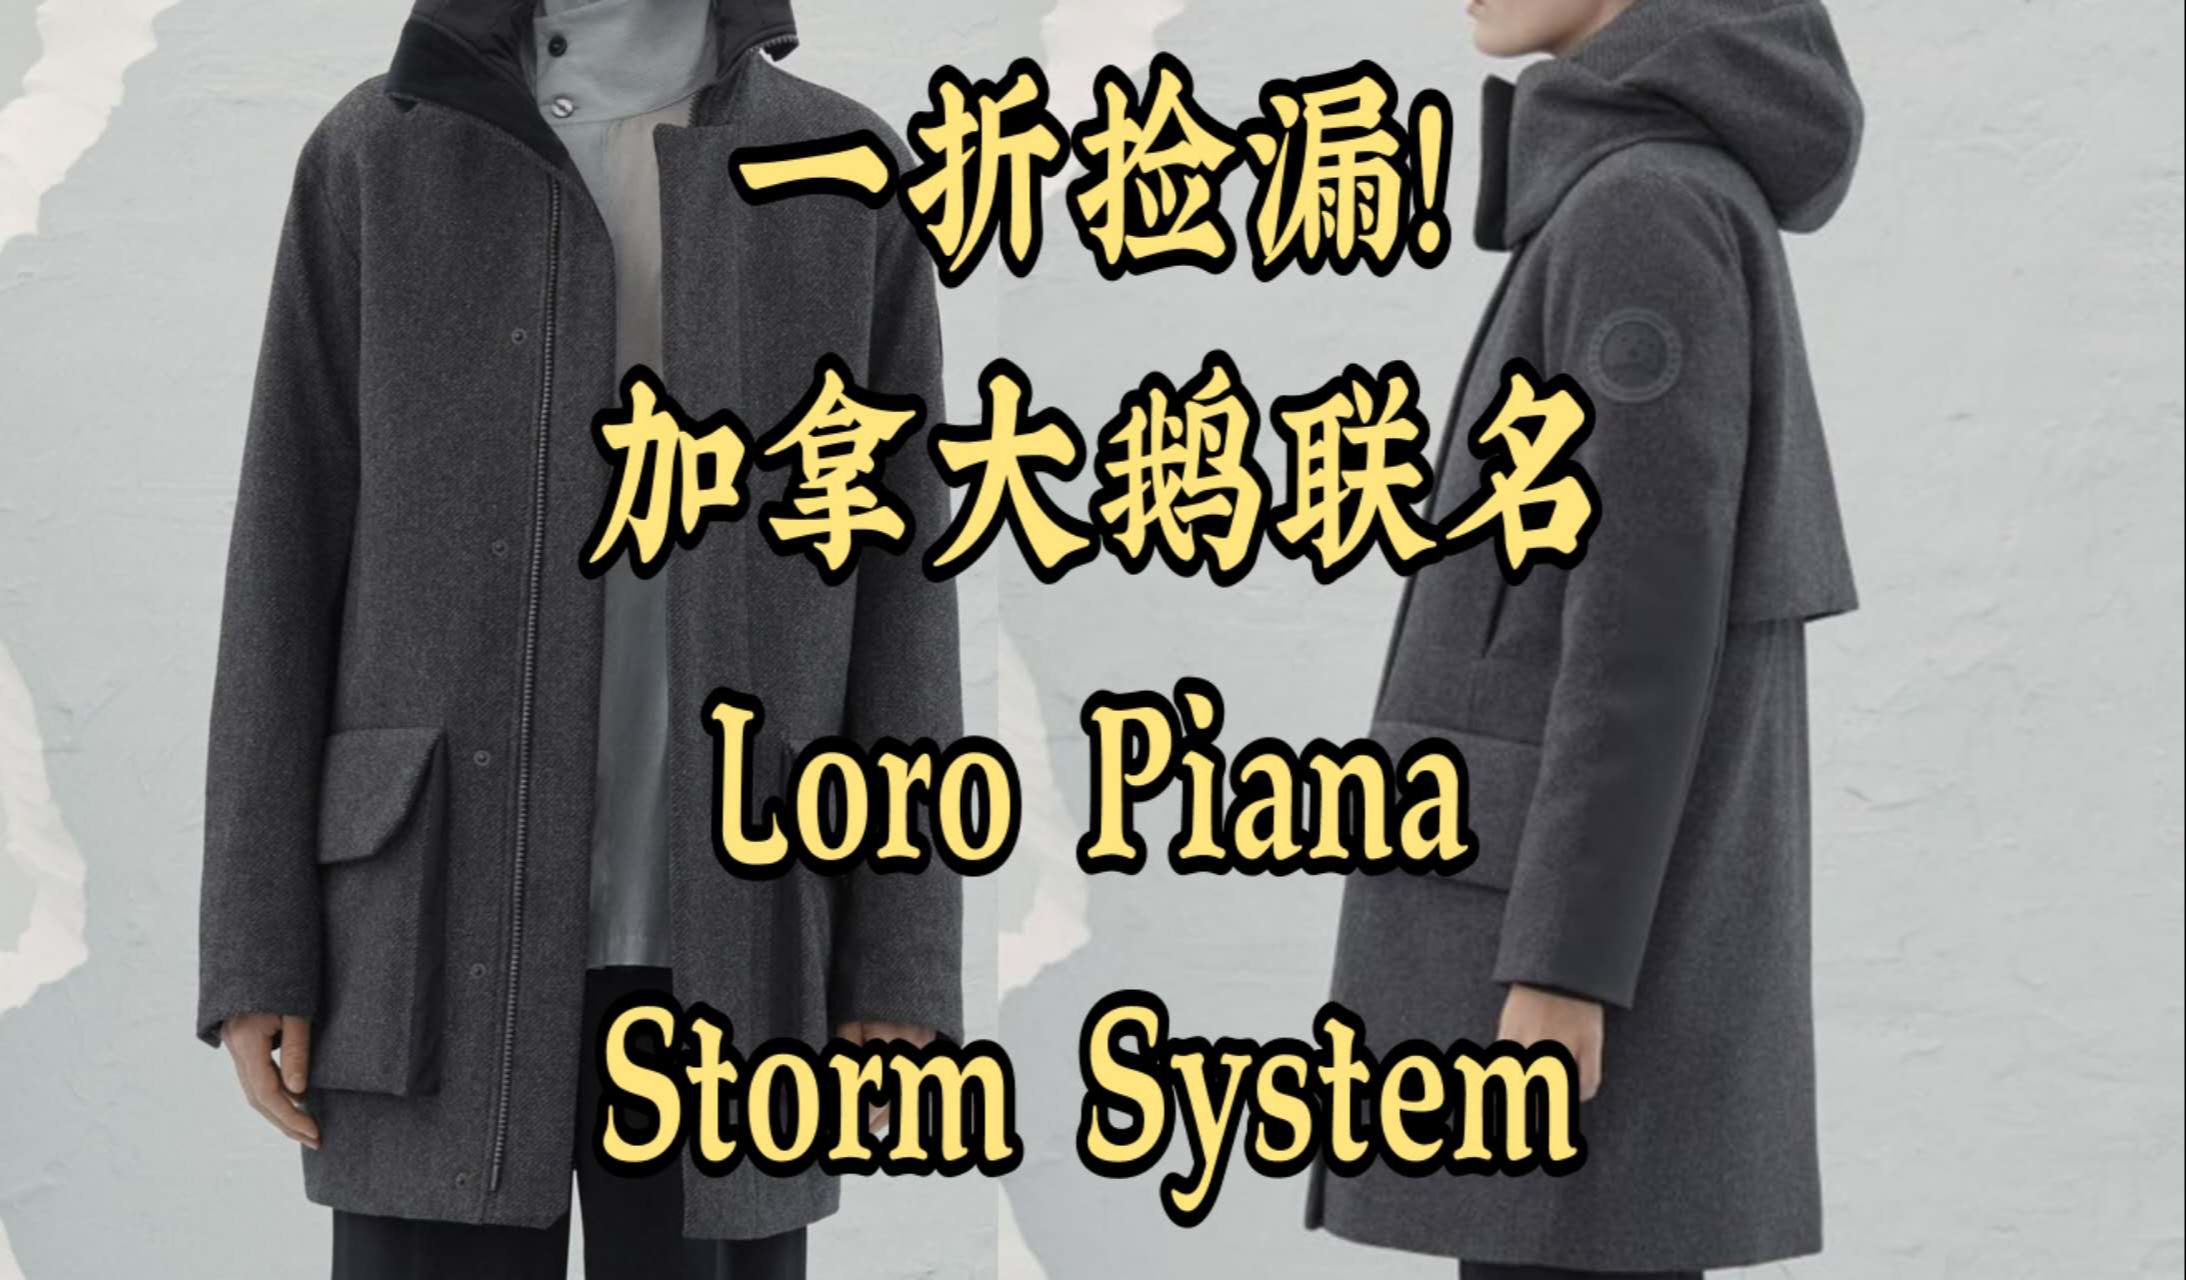 /Simon/一折捡漏Loro Piana Storm System 面料加拿大鹅联名